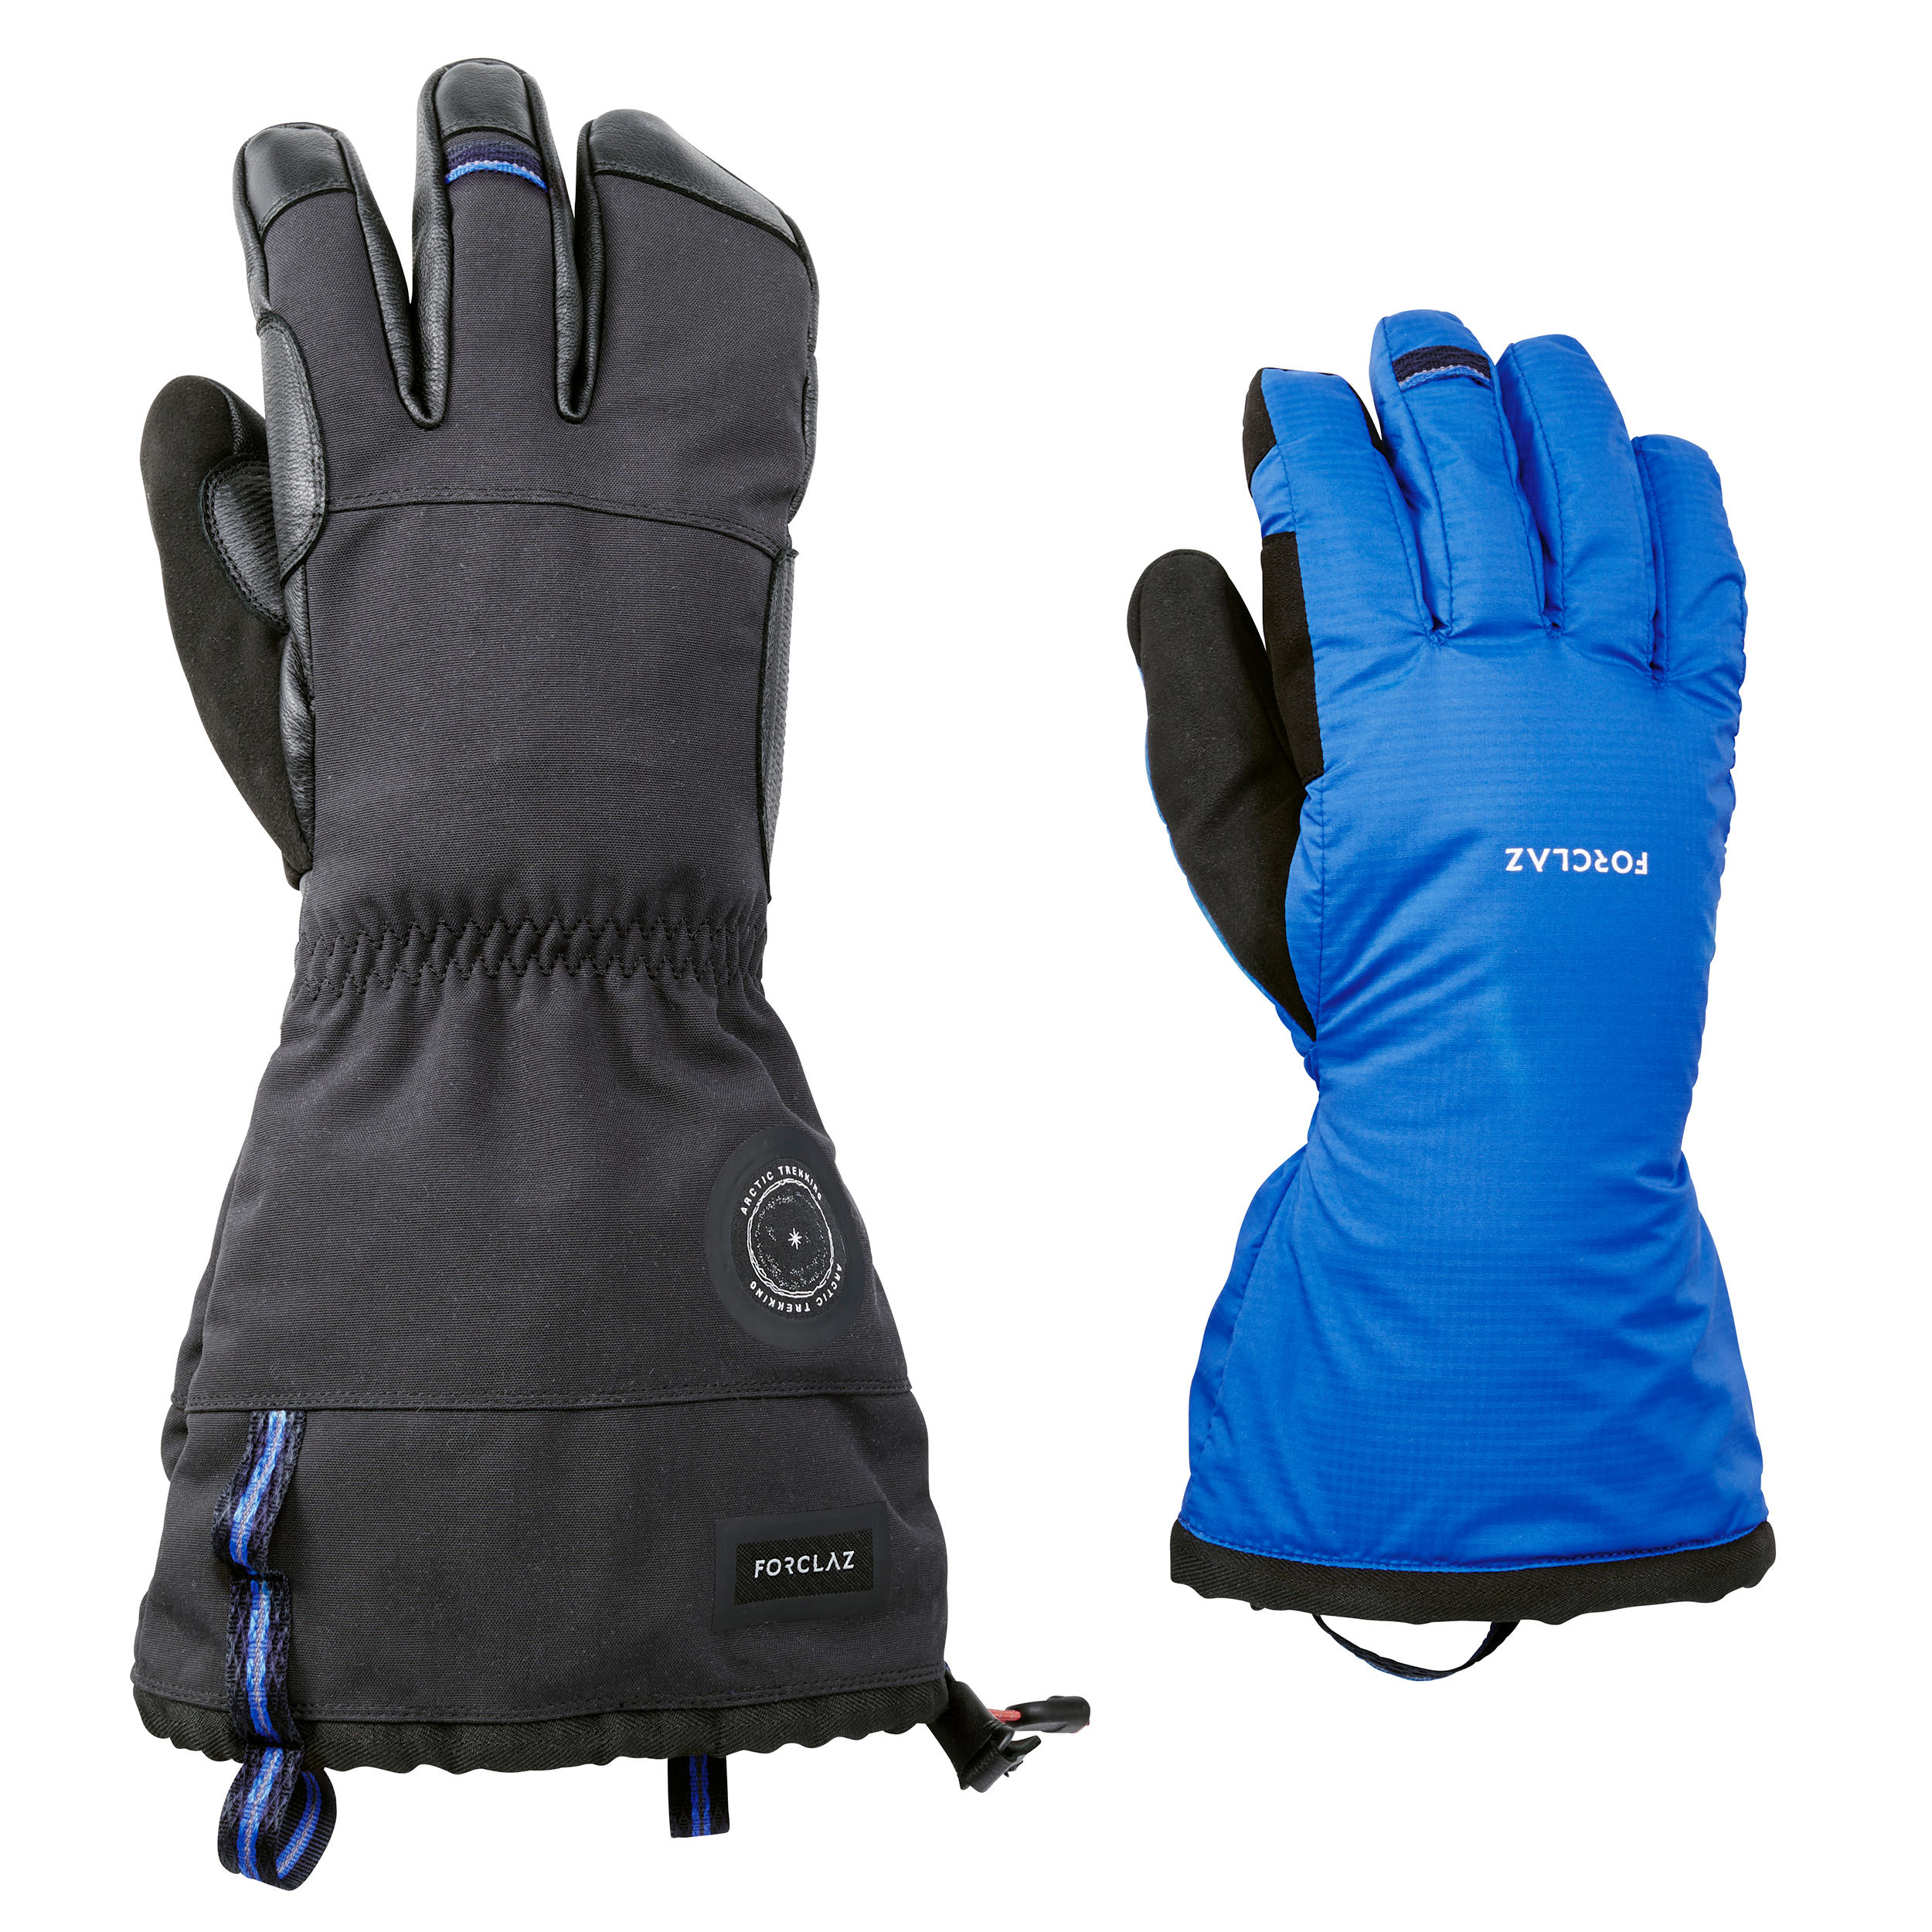 Premium Non-Slip Exposure Finger Gloves Half Finger Warm Dexterity Gloves for Men Women for Cycling Running Outdoor Activities Lyperkin Winter Gloves 